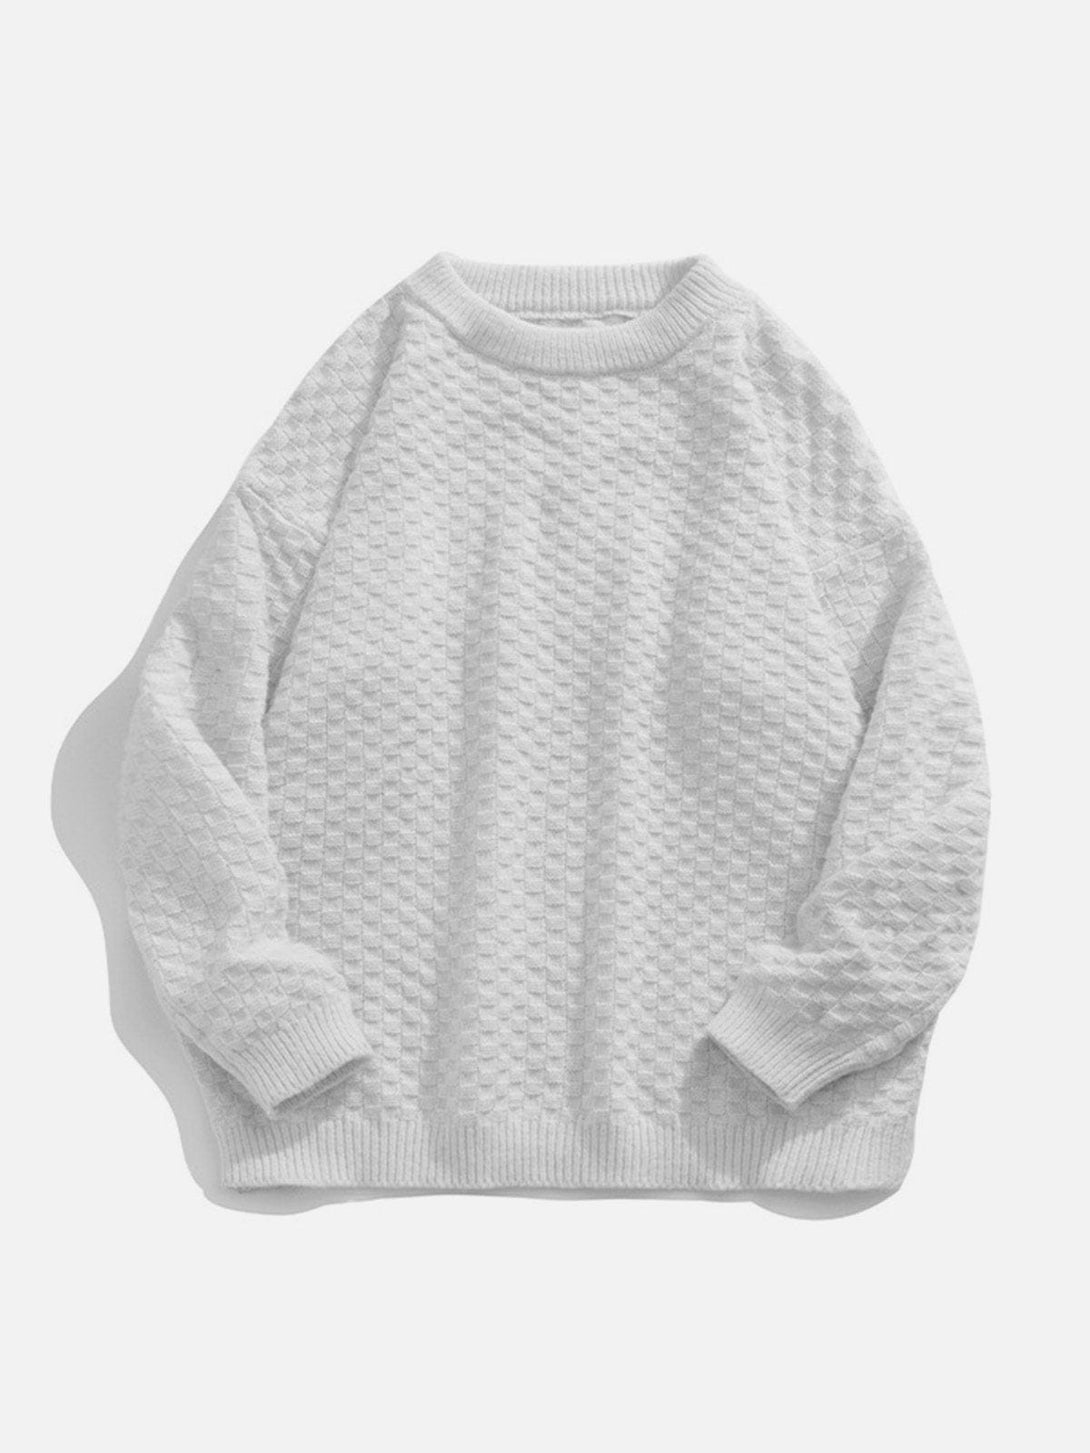 Evapacs - Textured Solid Color Sweater- Streetwear Fashion - evapacs.com